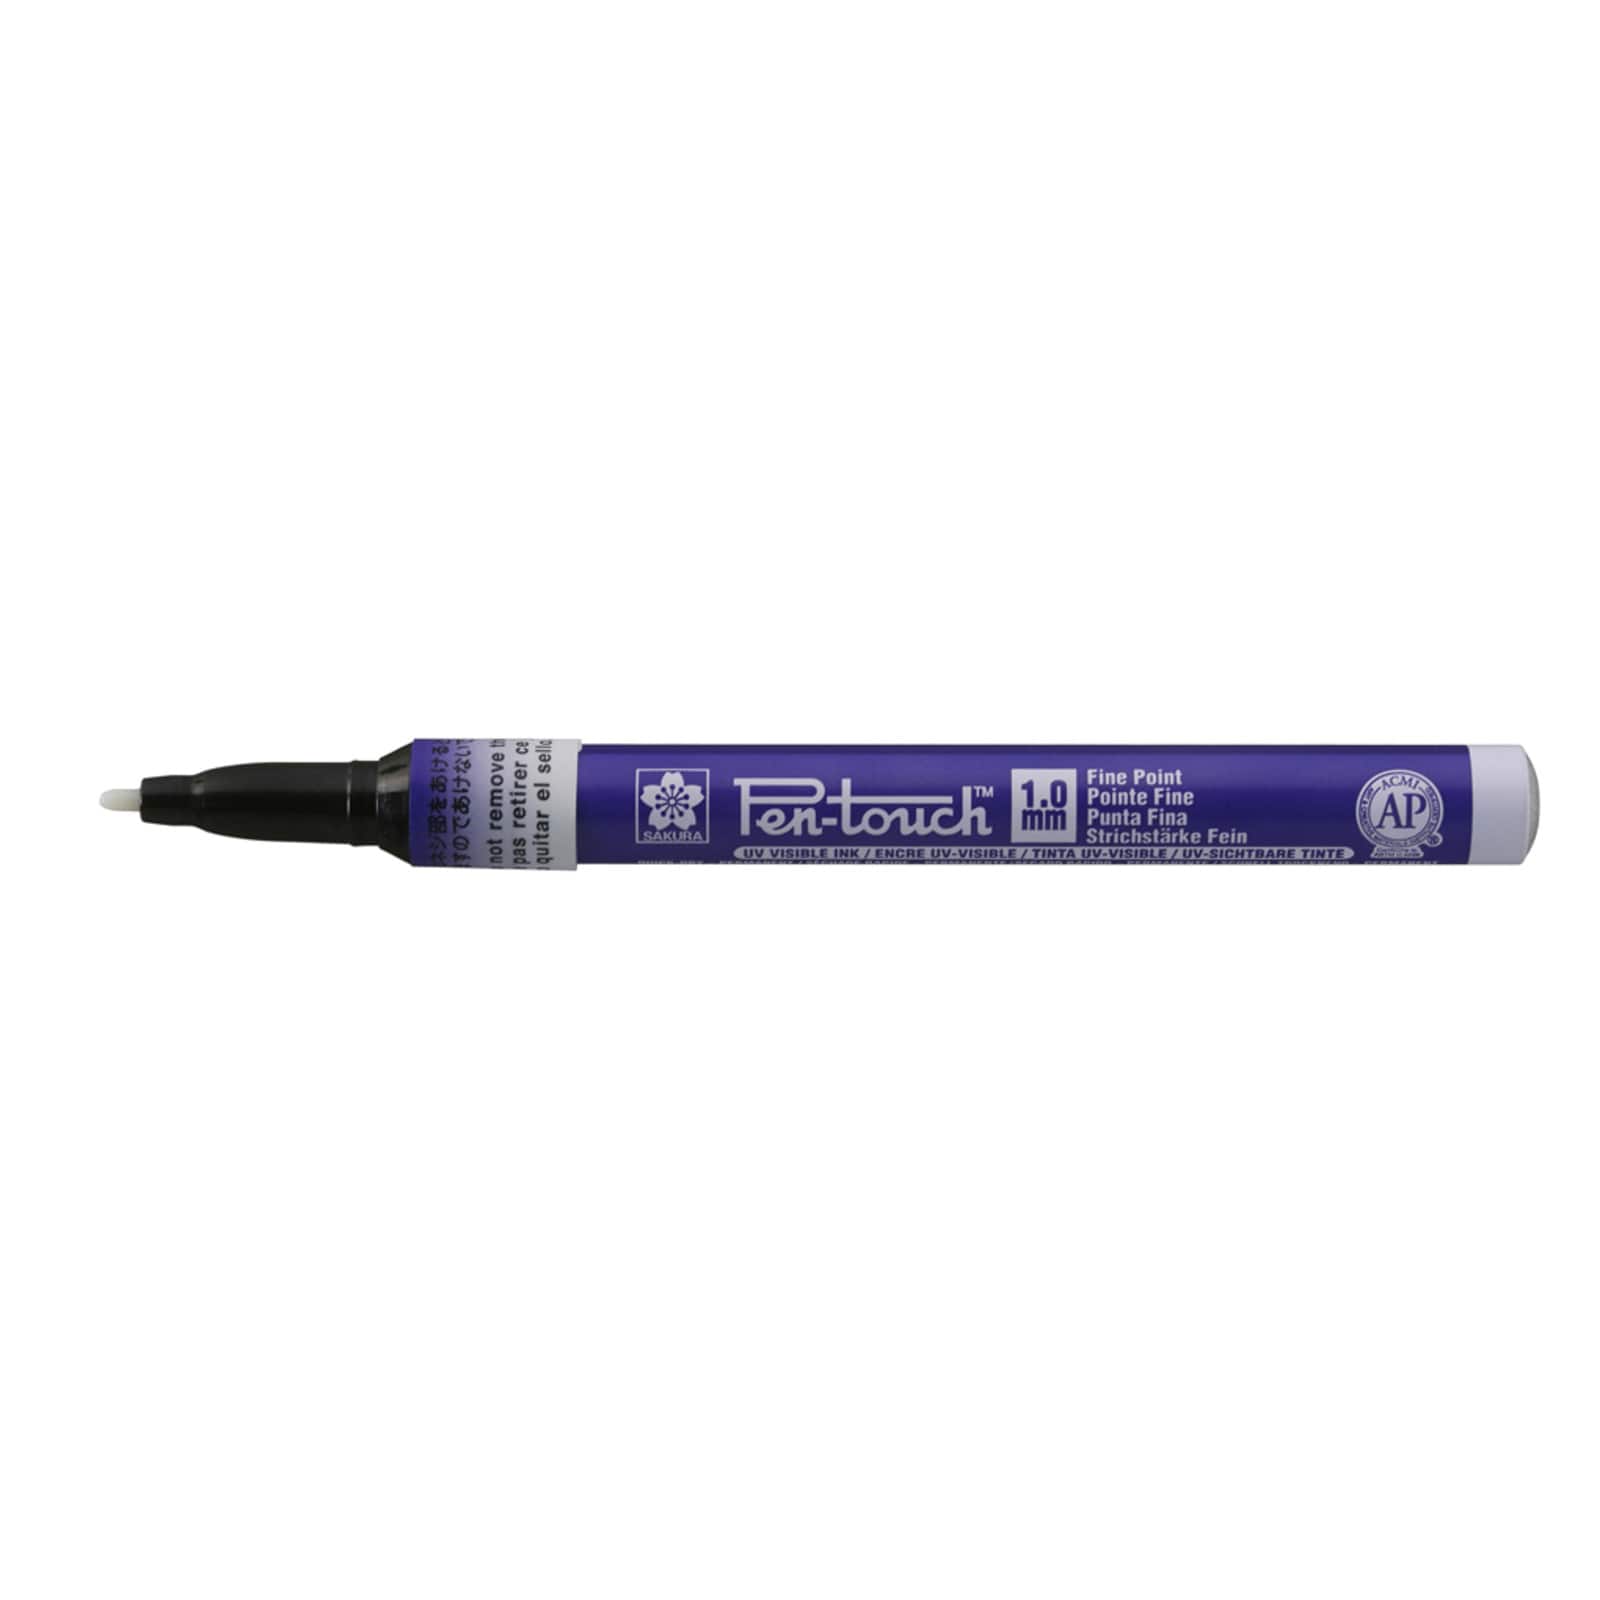 Sakura® Pentouch™ UV-Visible Blue Fluorescent Marker